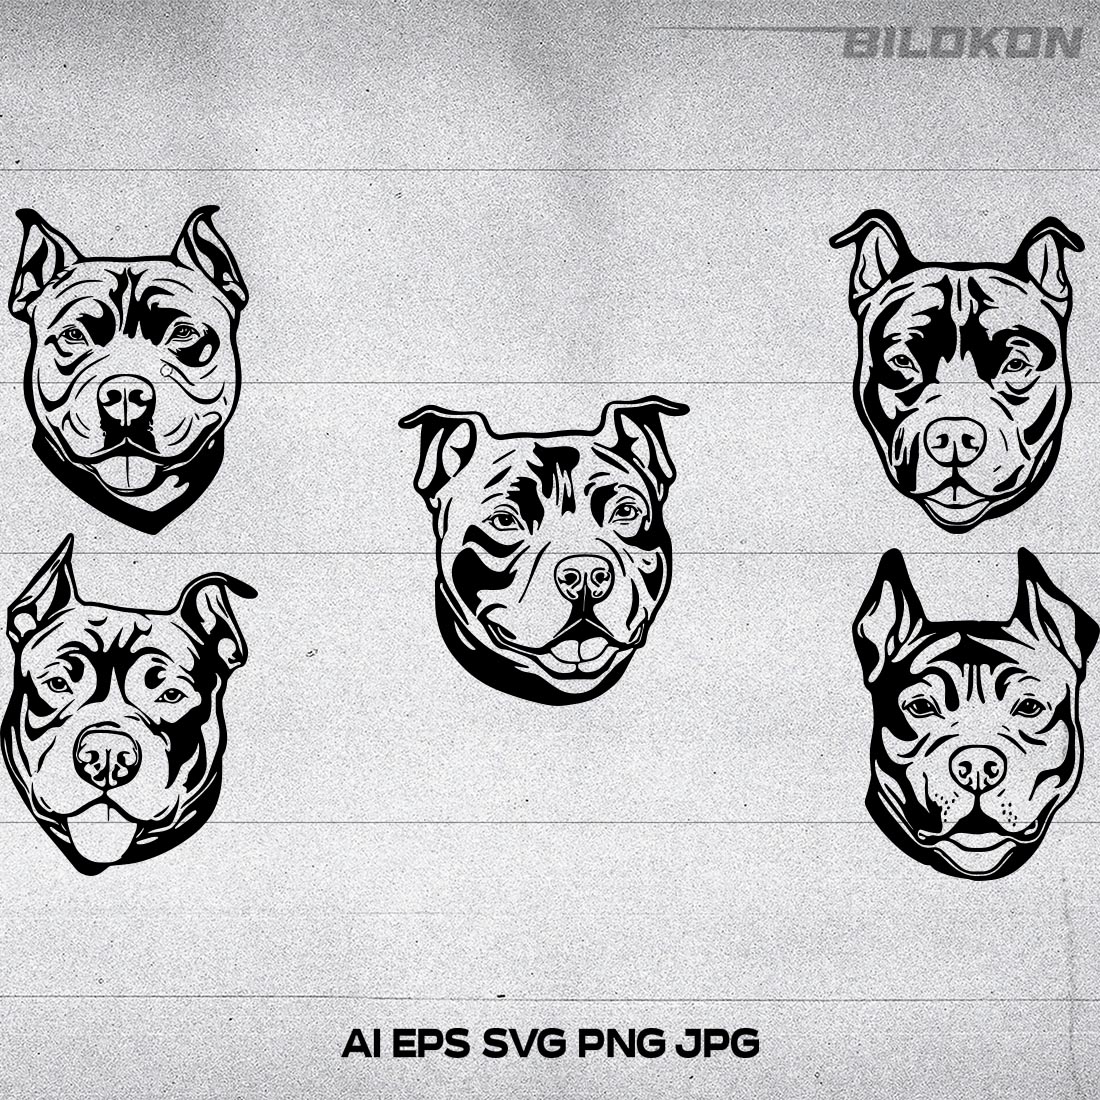 Pitbull dog face, SVG, Vector, Illustration cover image.